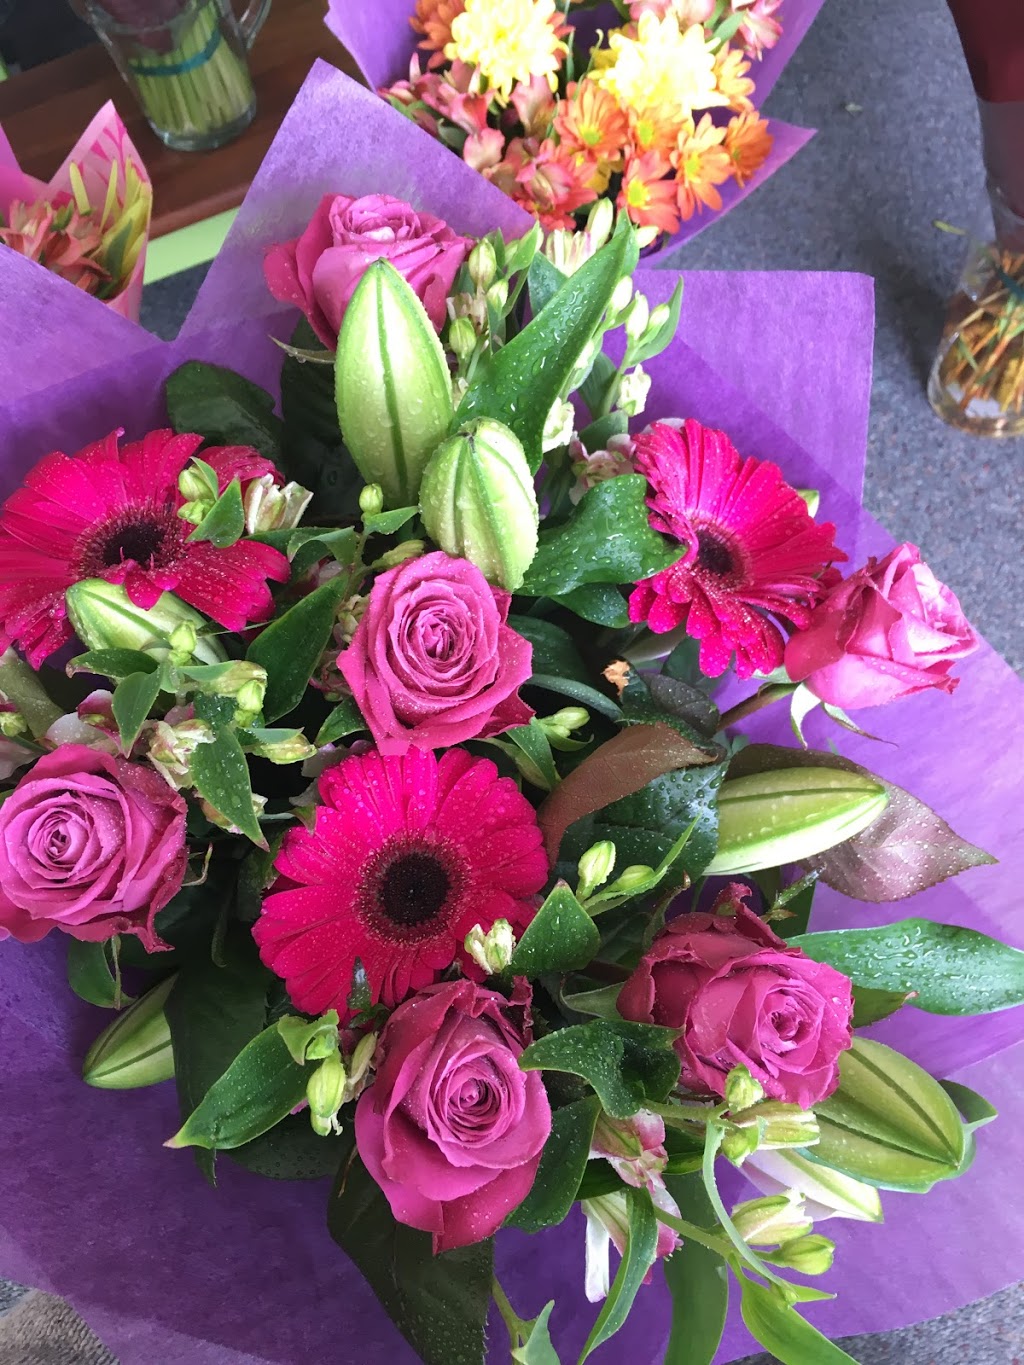 Bunches Florist | florist | 85 Channel Hwy, Kingston TAS 7050, Australia | 0362297845 OR +61 3 6229 7845